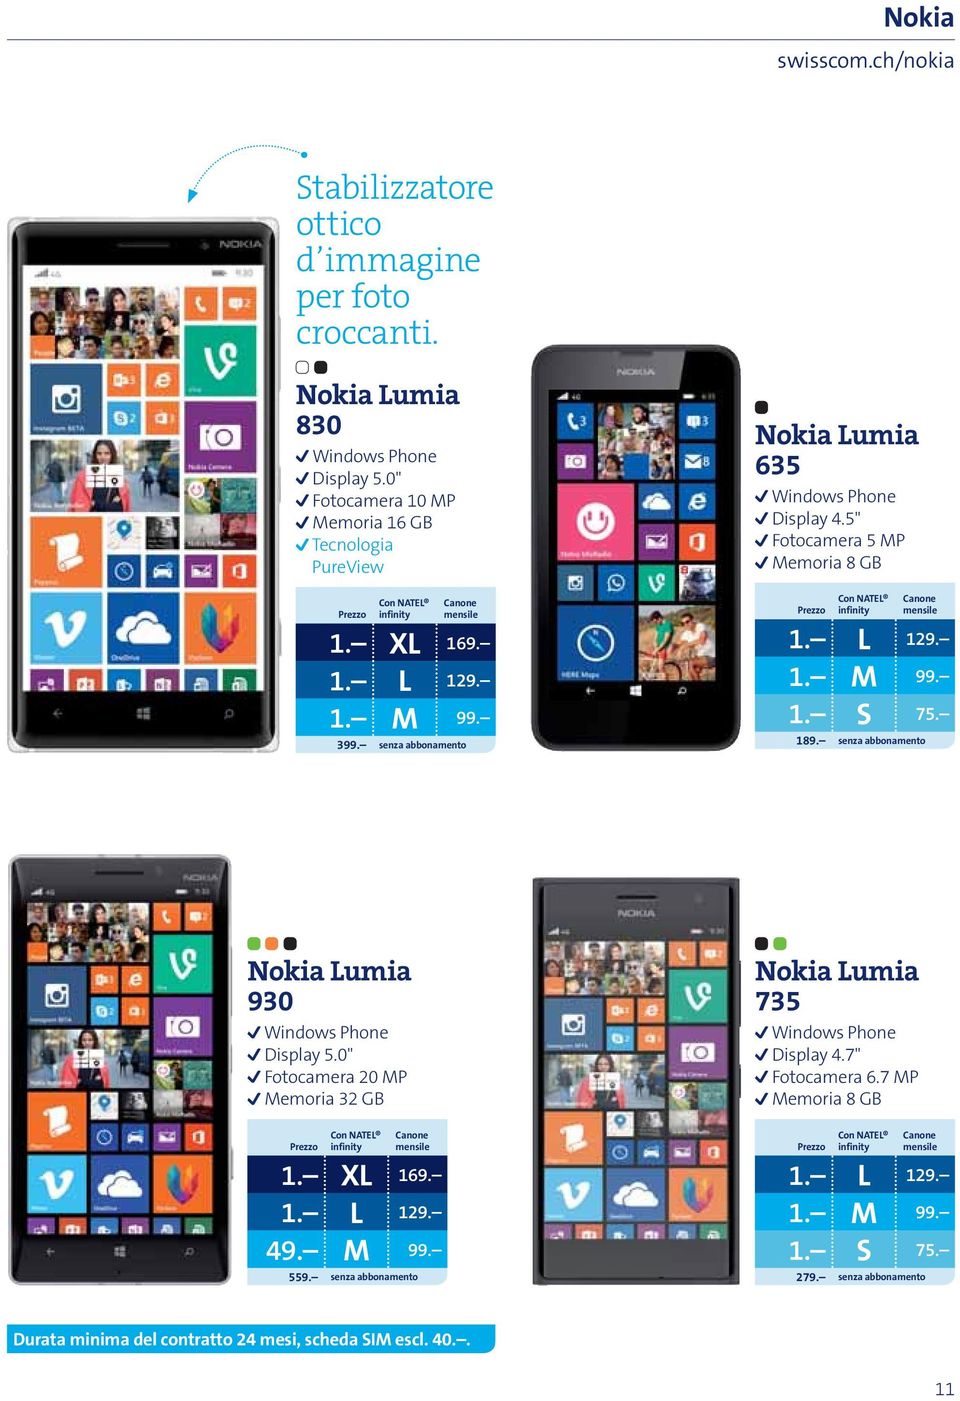 5" Fotocamera 5 MP Memoria 8 GB 1. L 129. 1. M 99. 1. S 75. 189. senza abbonamento Nokia Lumia 930 Windows Phone Display 5.0" Fotocamera 20 MP Memoria 32 GB 1.